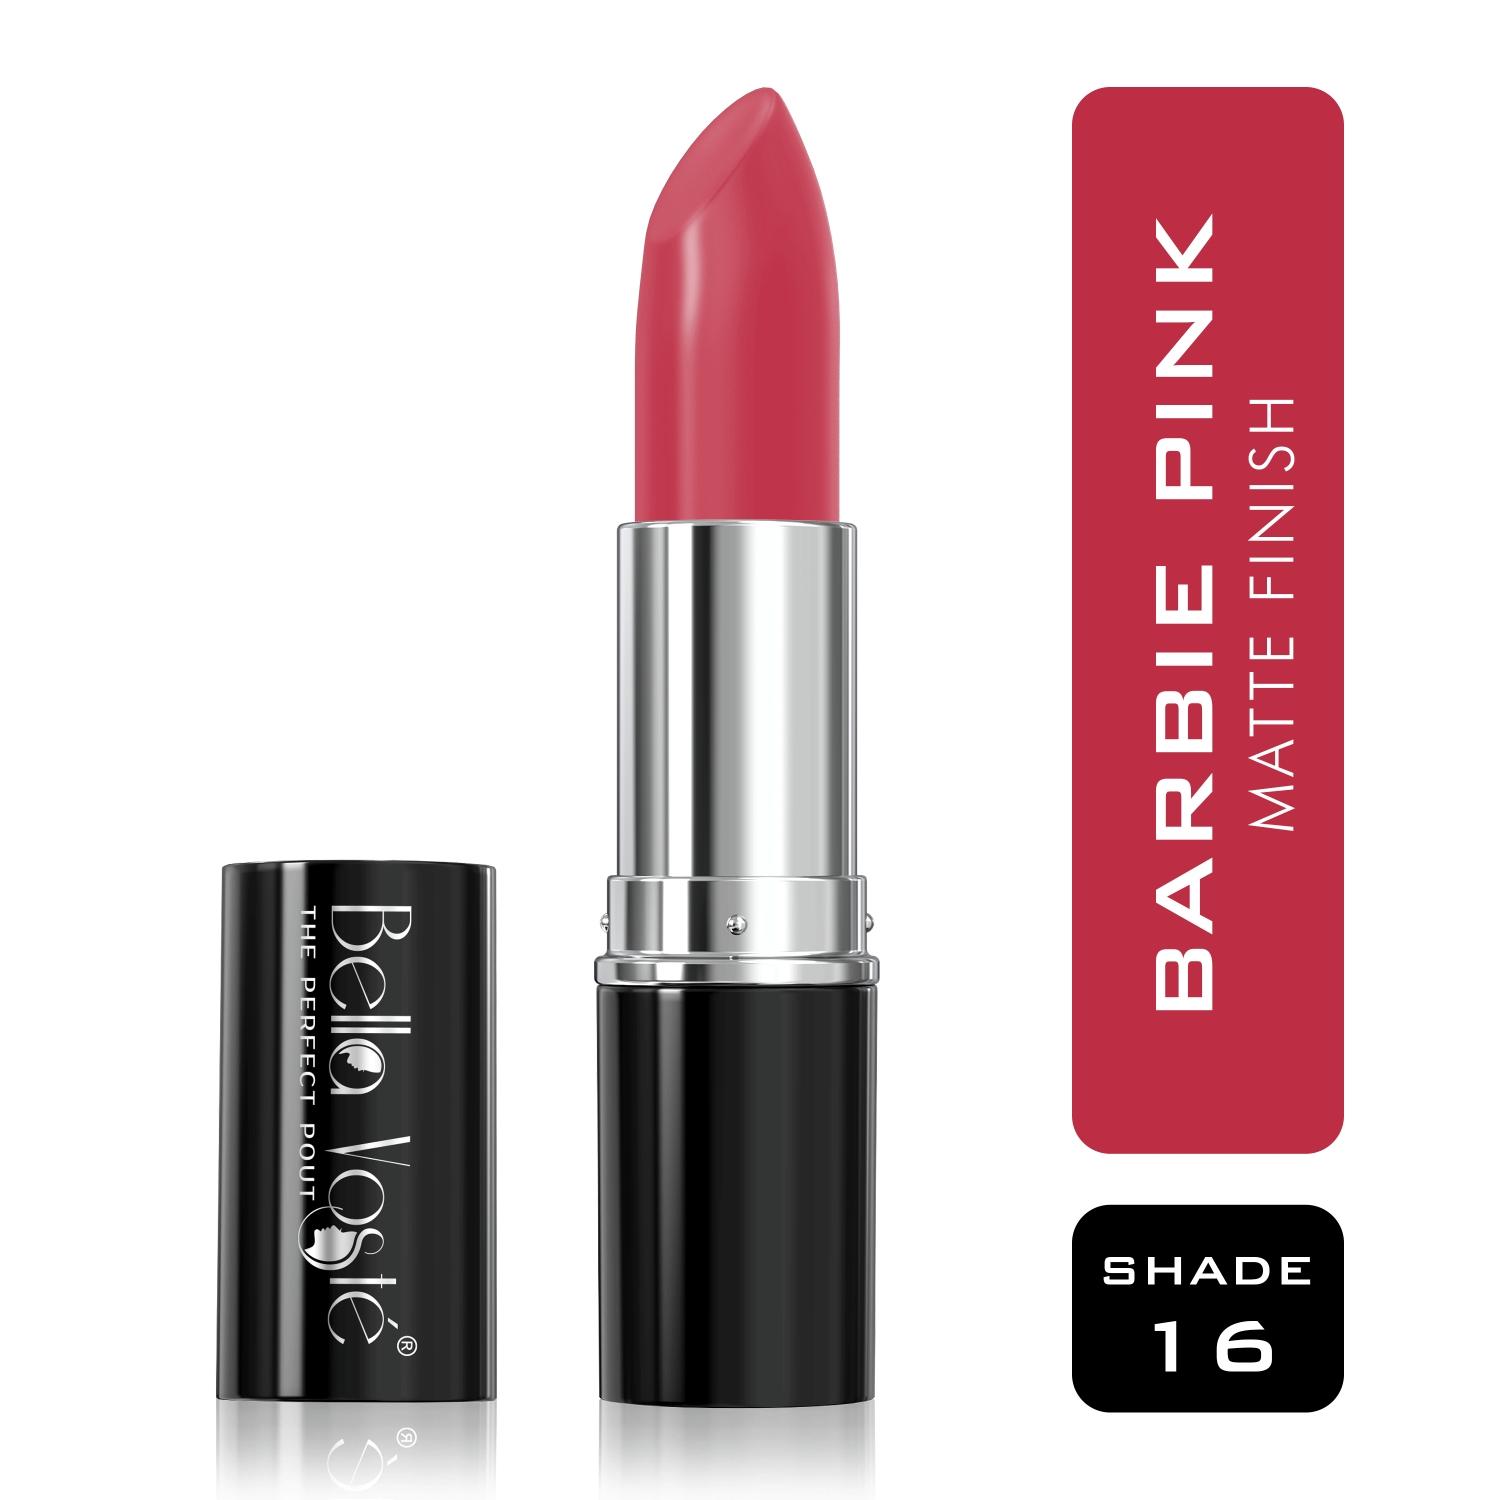 Bella Voste Sheer Creme Lust Lipstick Barbie Pink (16) (4.2gm)